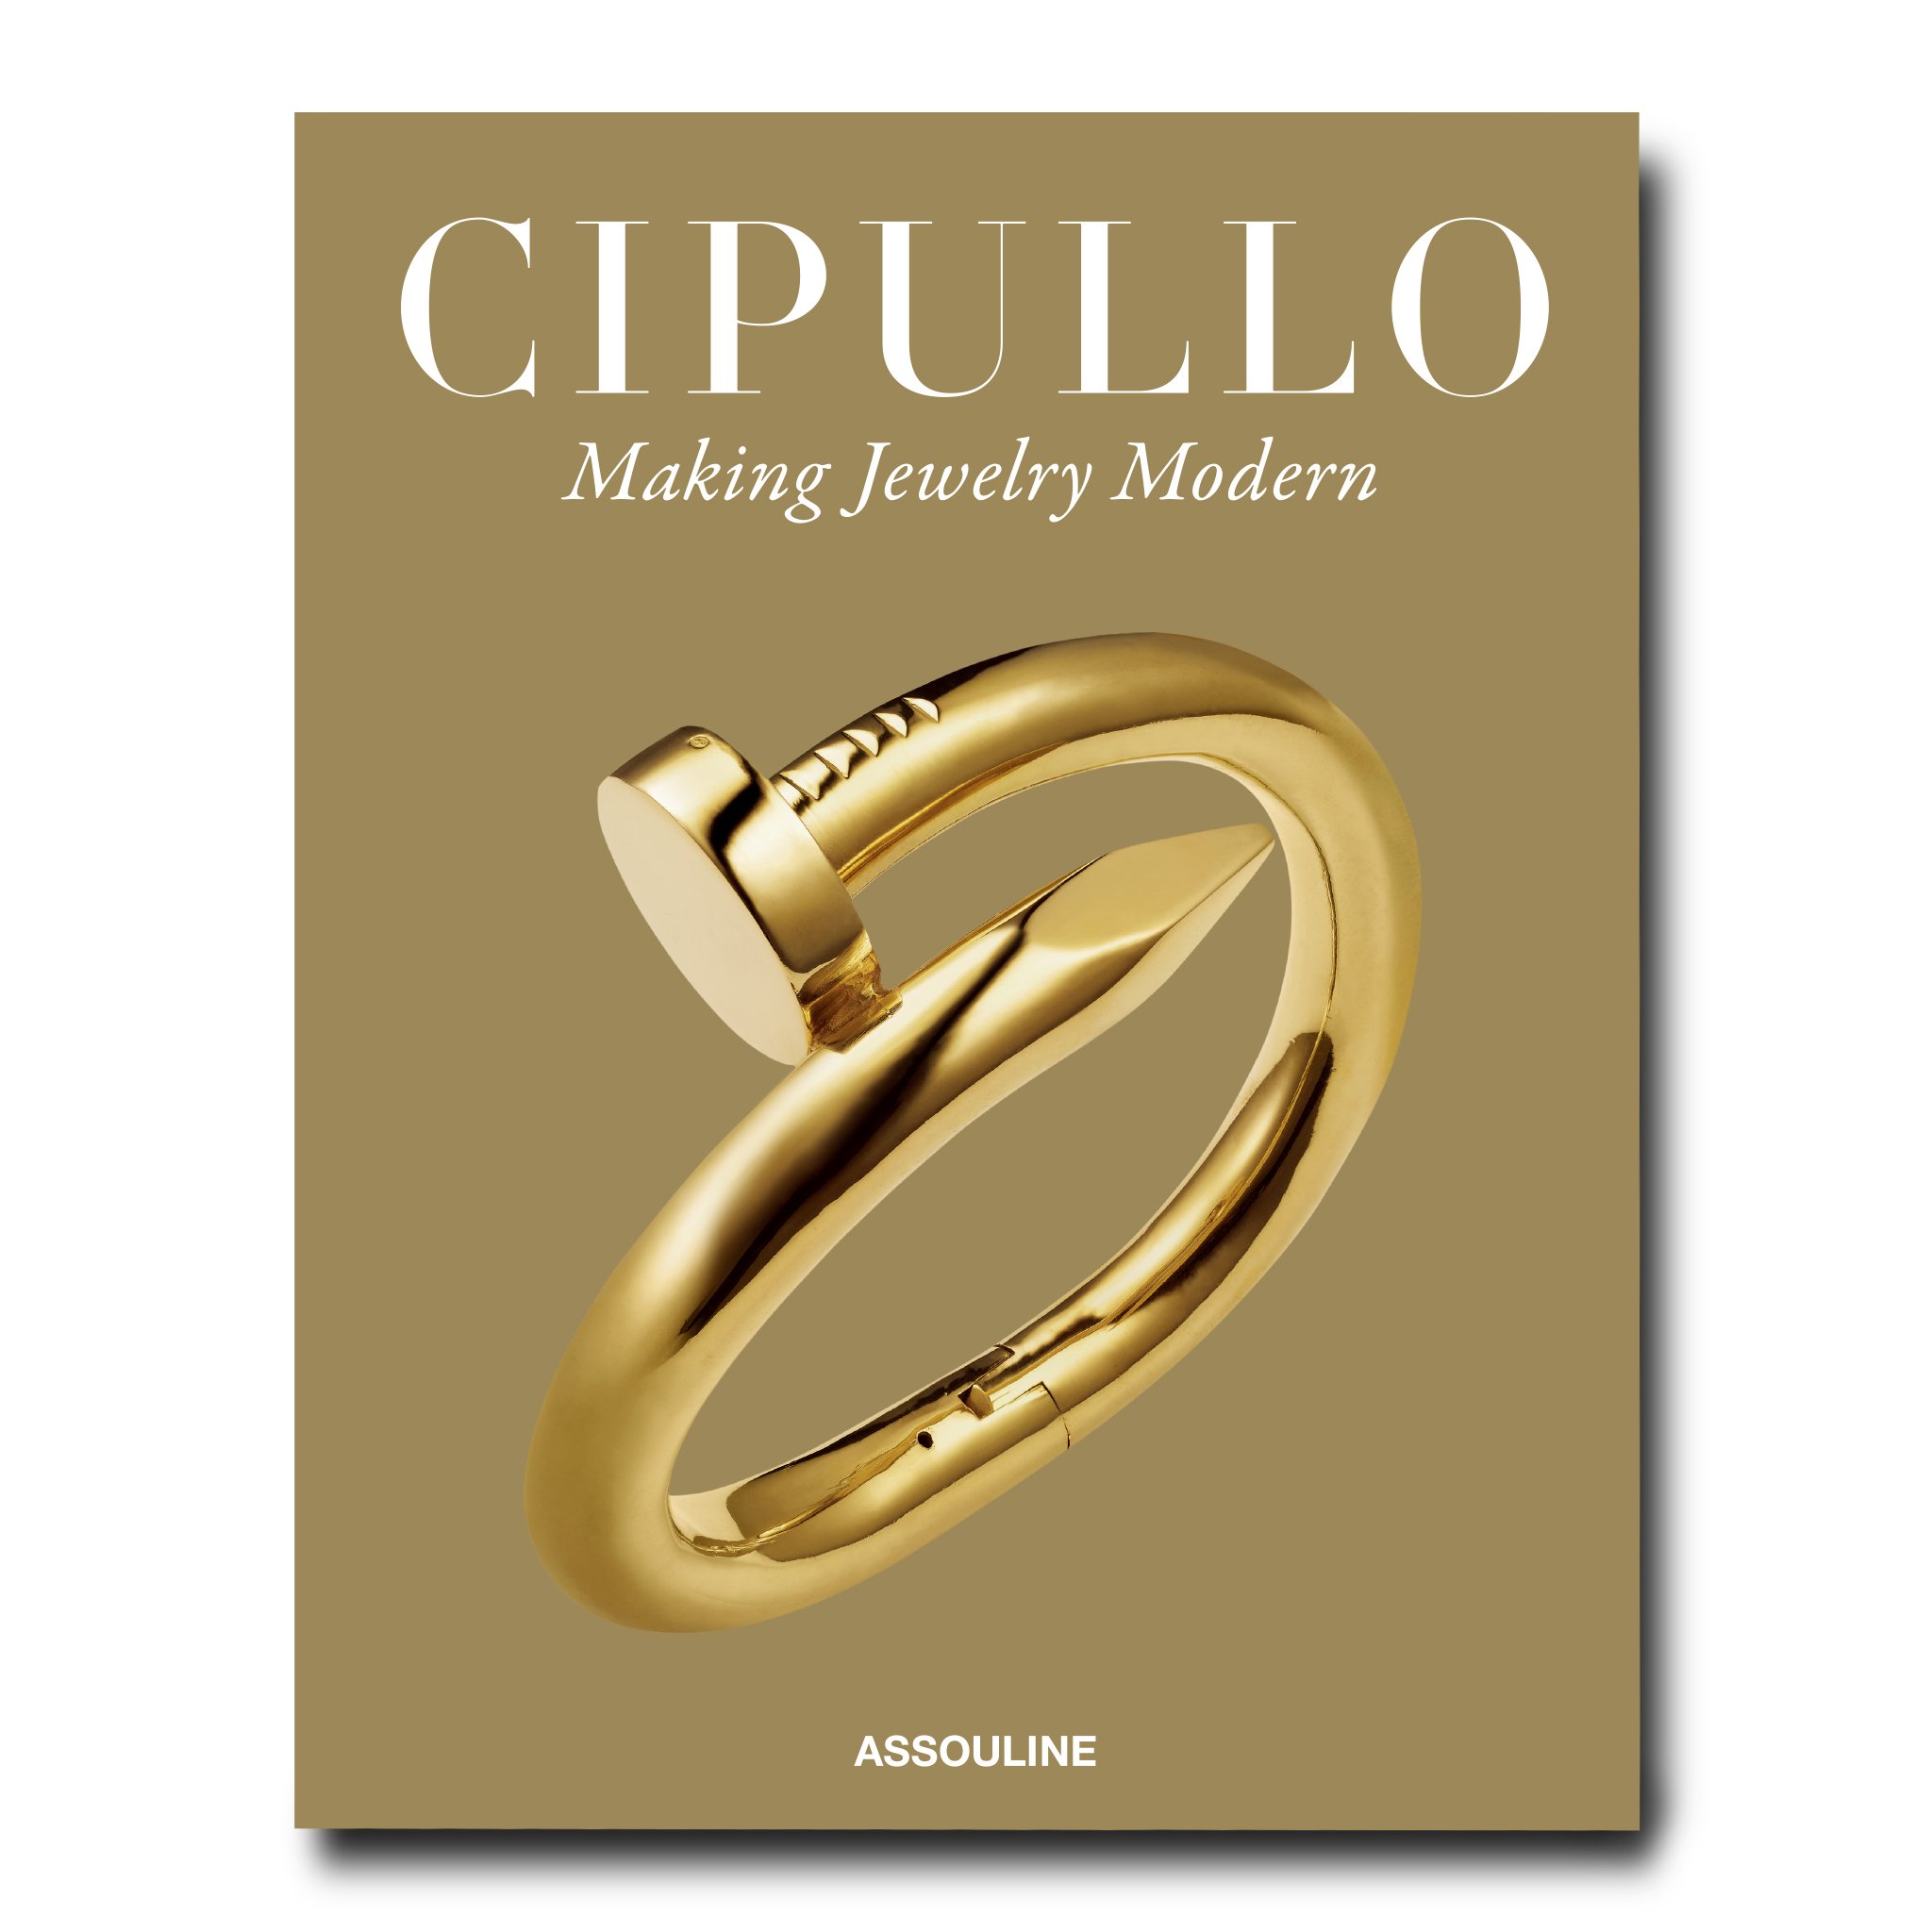 Cipullo Making Jewelry Modern